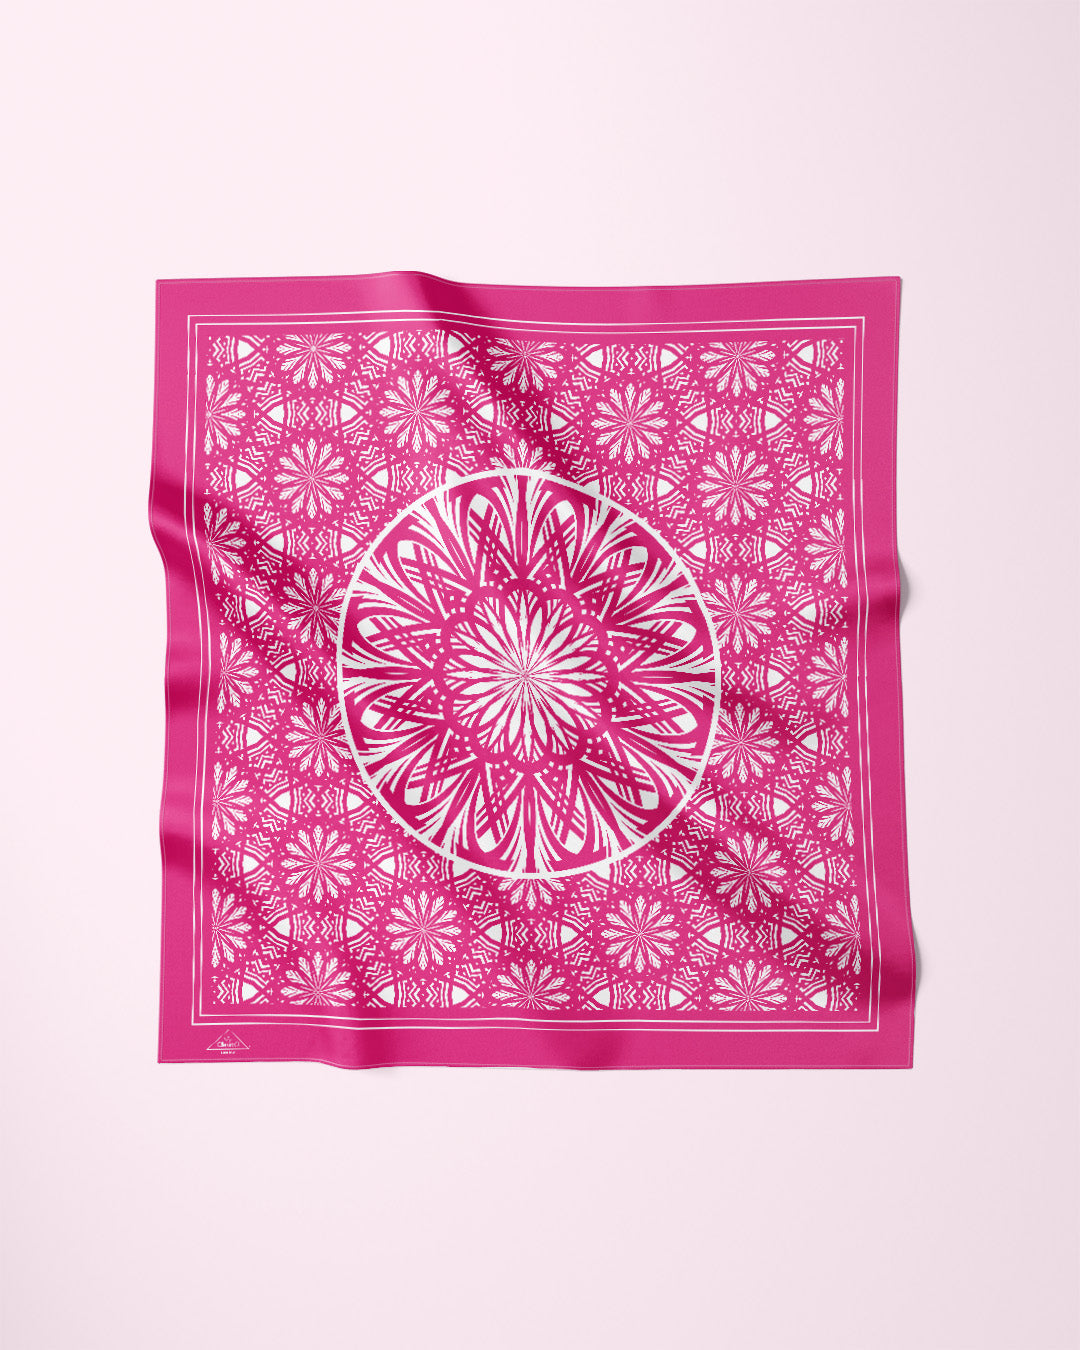 PINK SERENITY Mandala Designer Silk Scarf  Pink White Art A Porte by Alesia Chaika